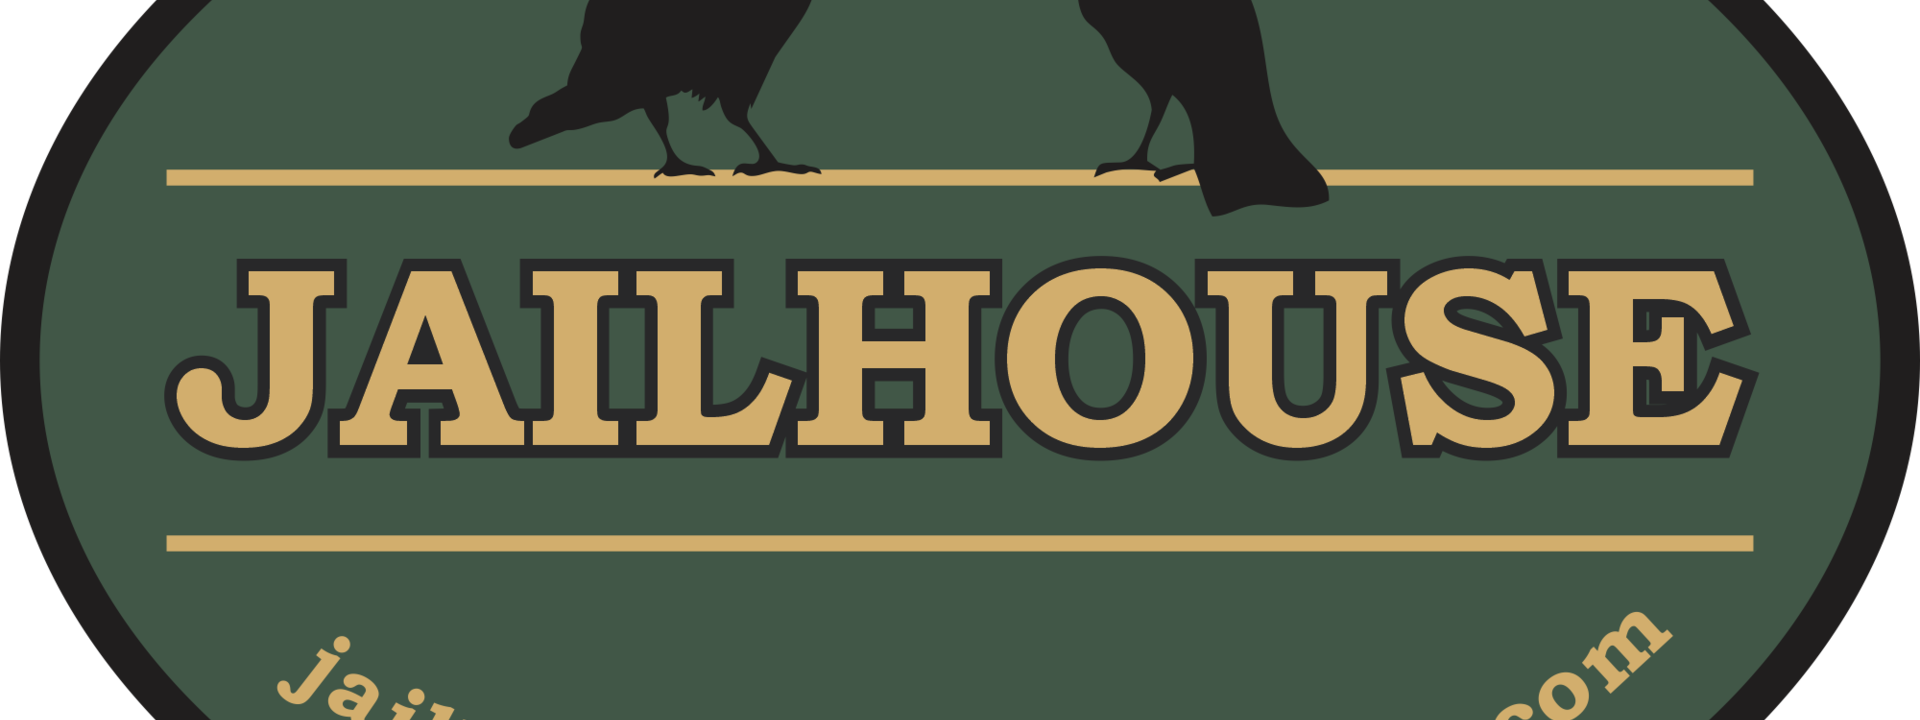 Jailhouse Cottage logo.png